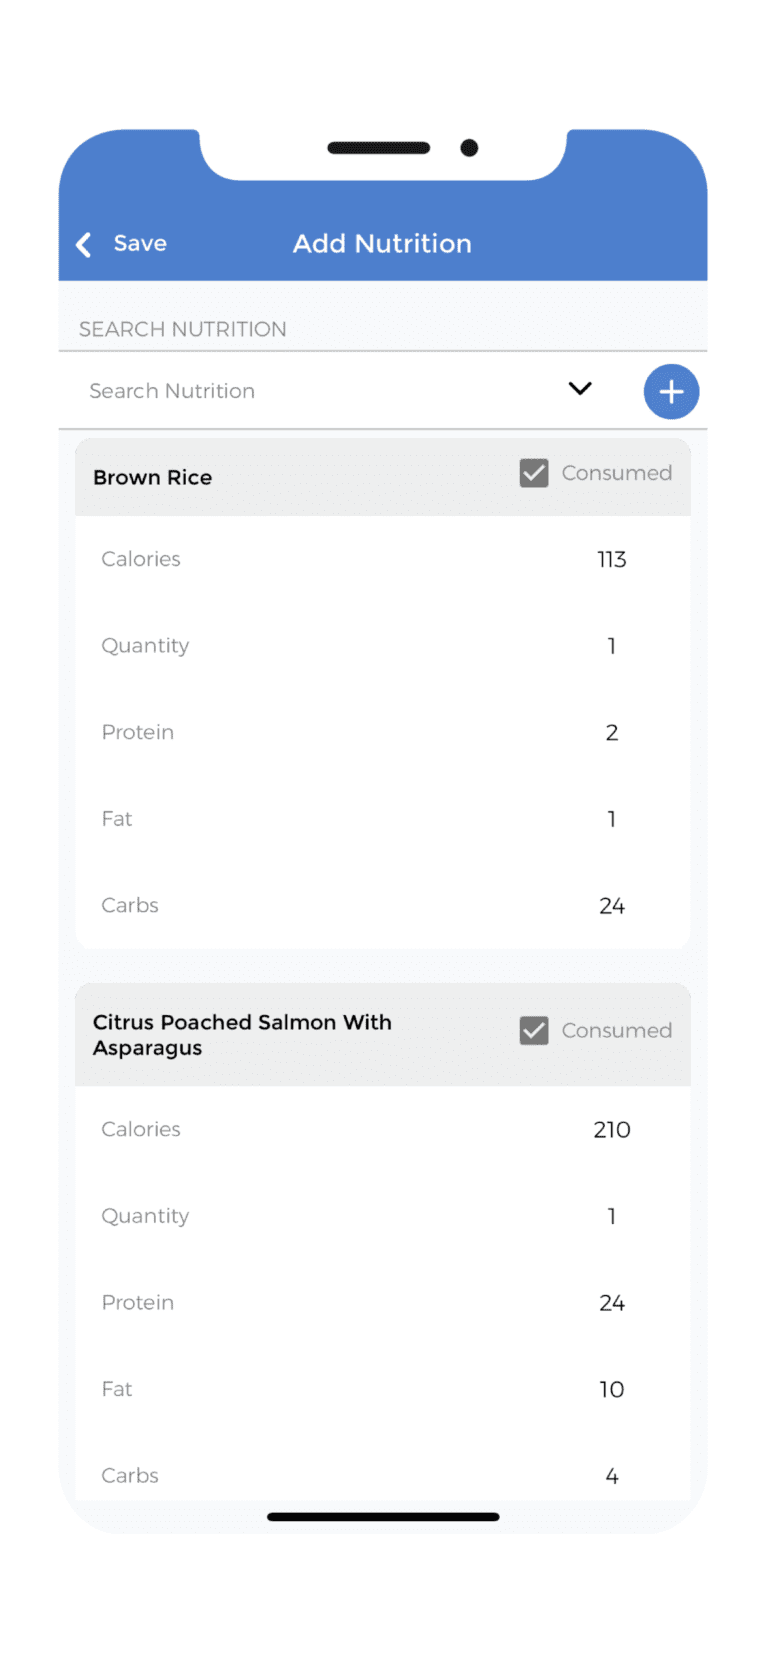 accurate calorie tracker app